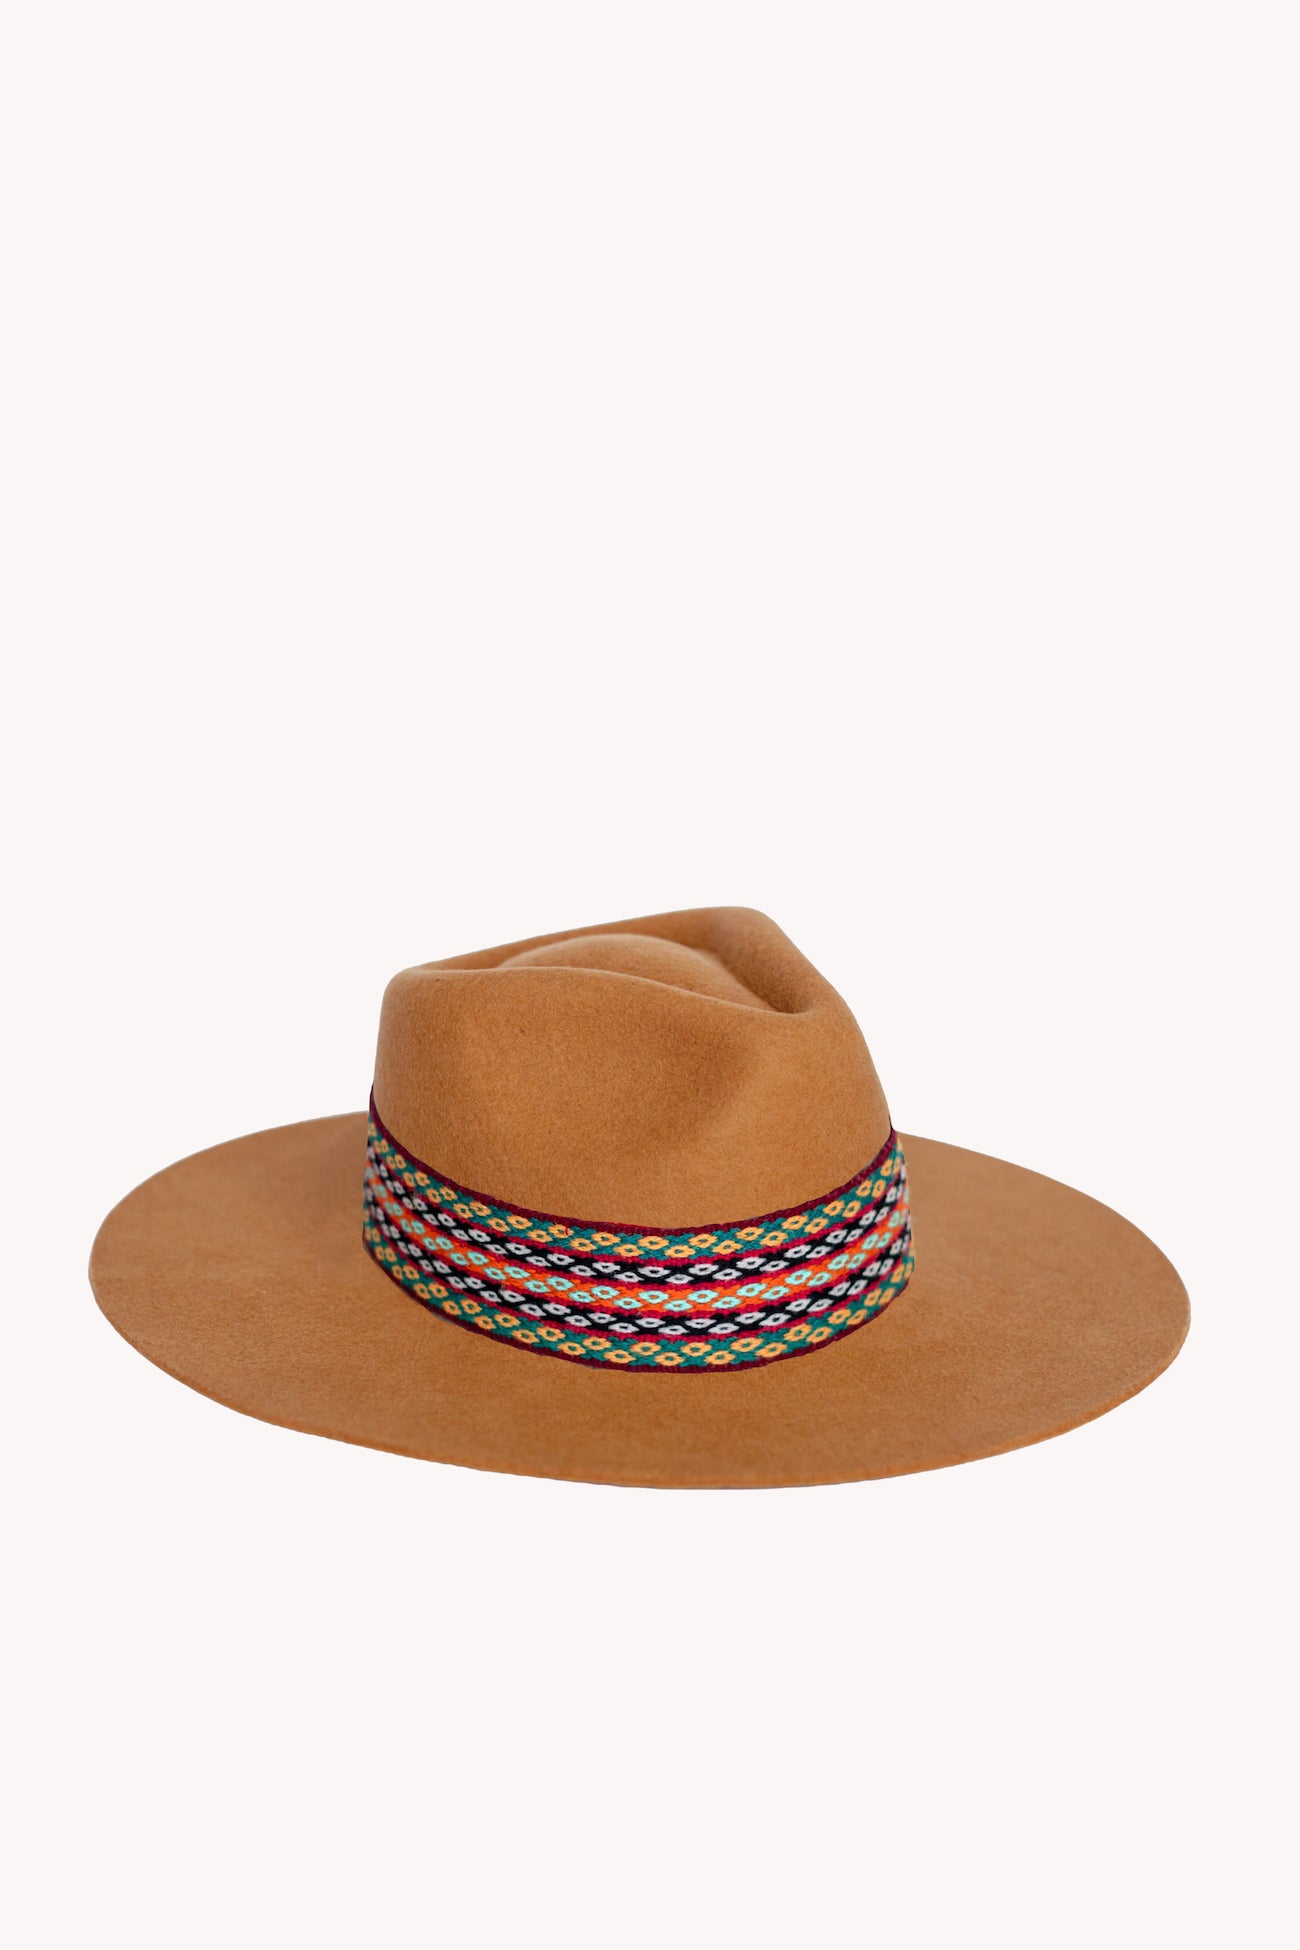 tan western style peruvian hat